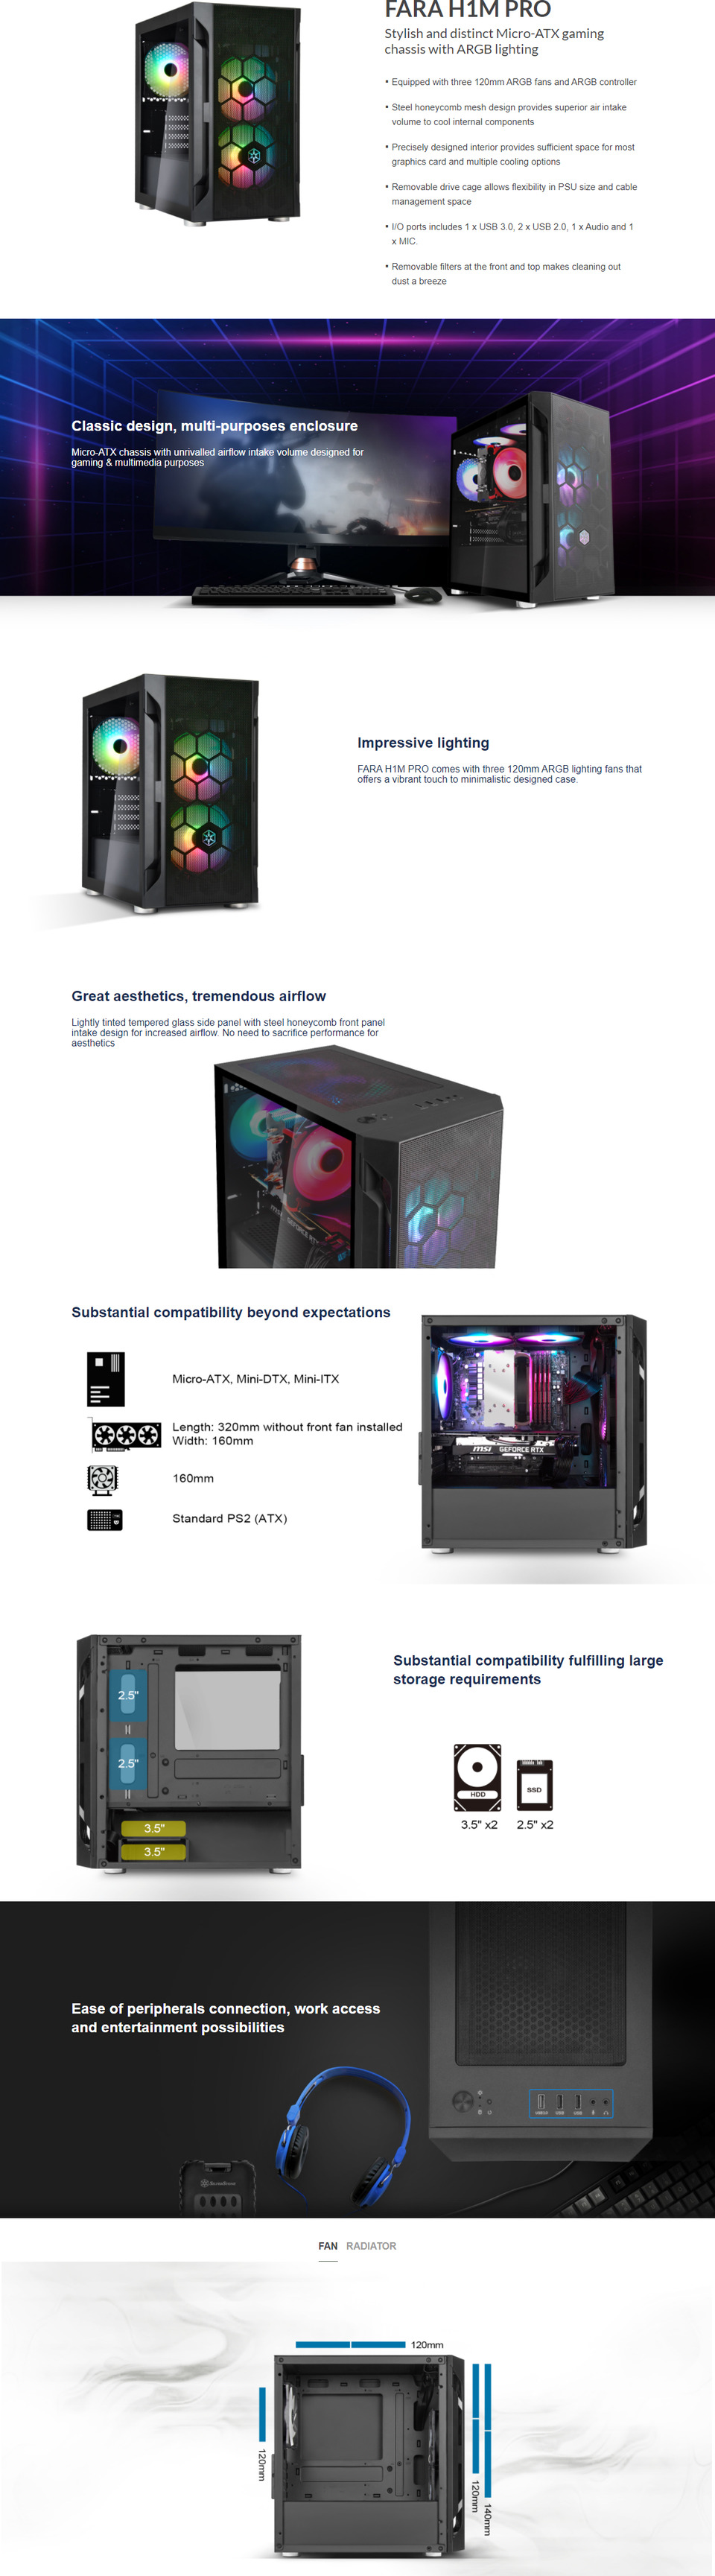 silverstone fara h1m pro microatx gaming case rgb black